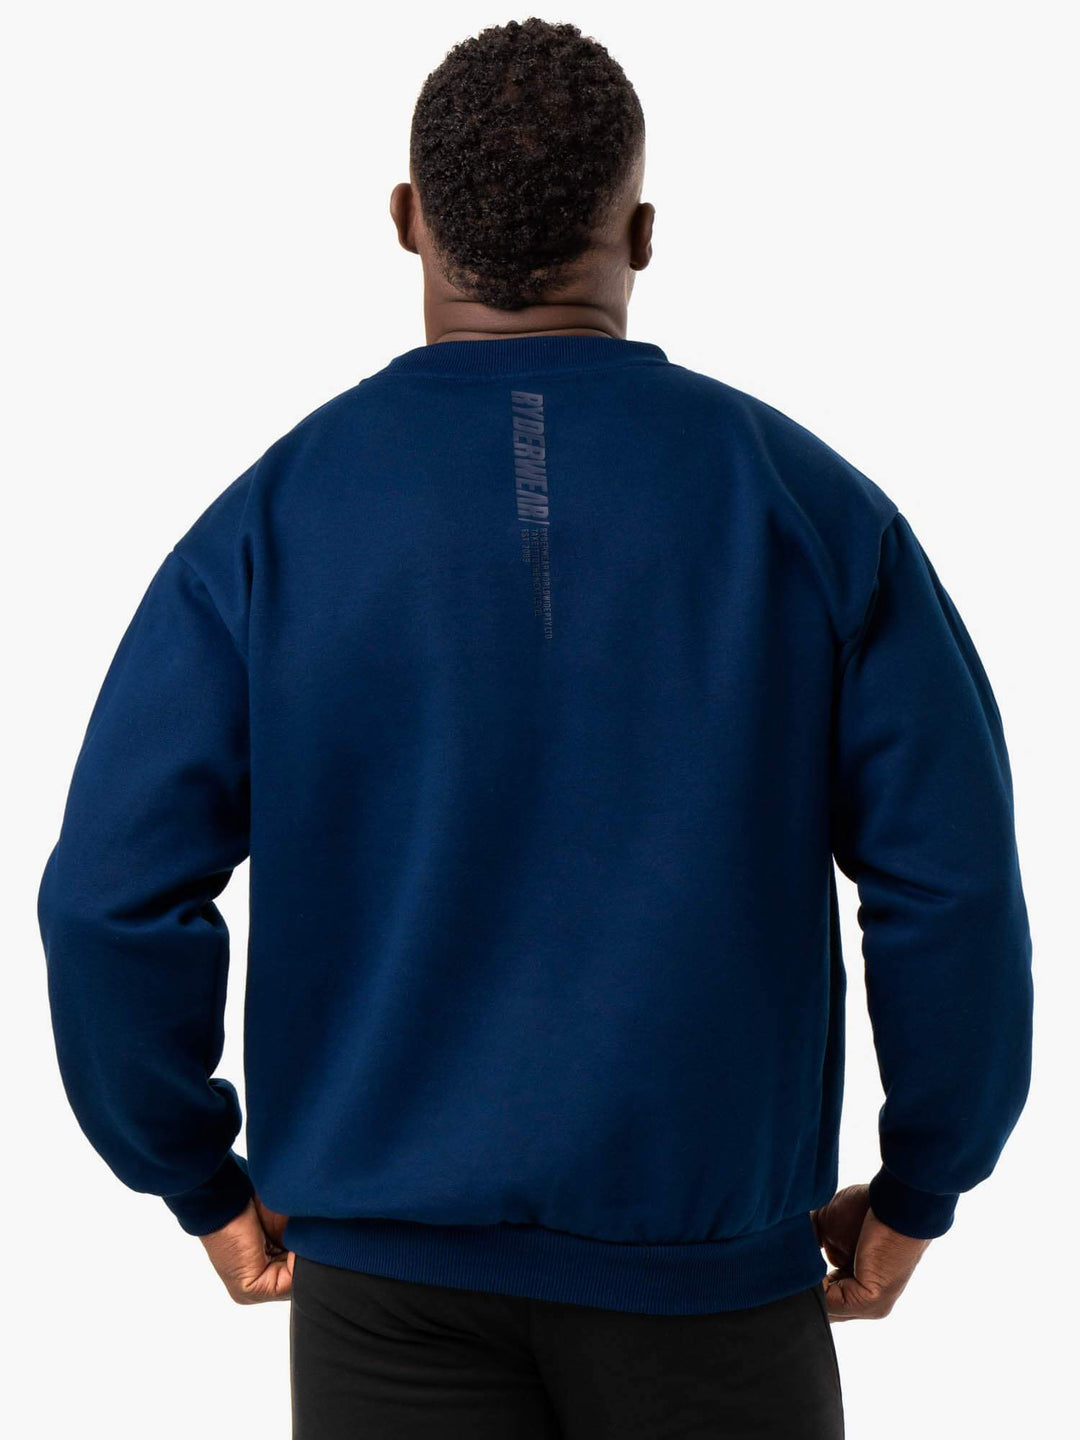 Reset Fleece Crew Neck - Blue Clothing Ryderwear 